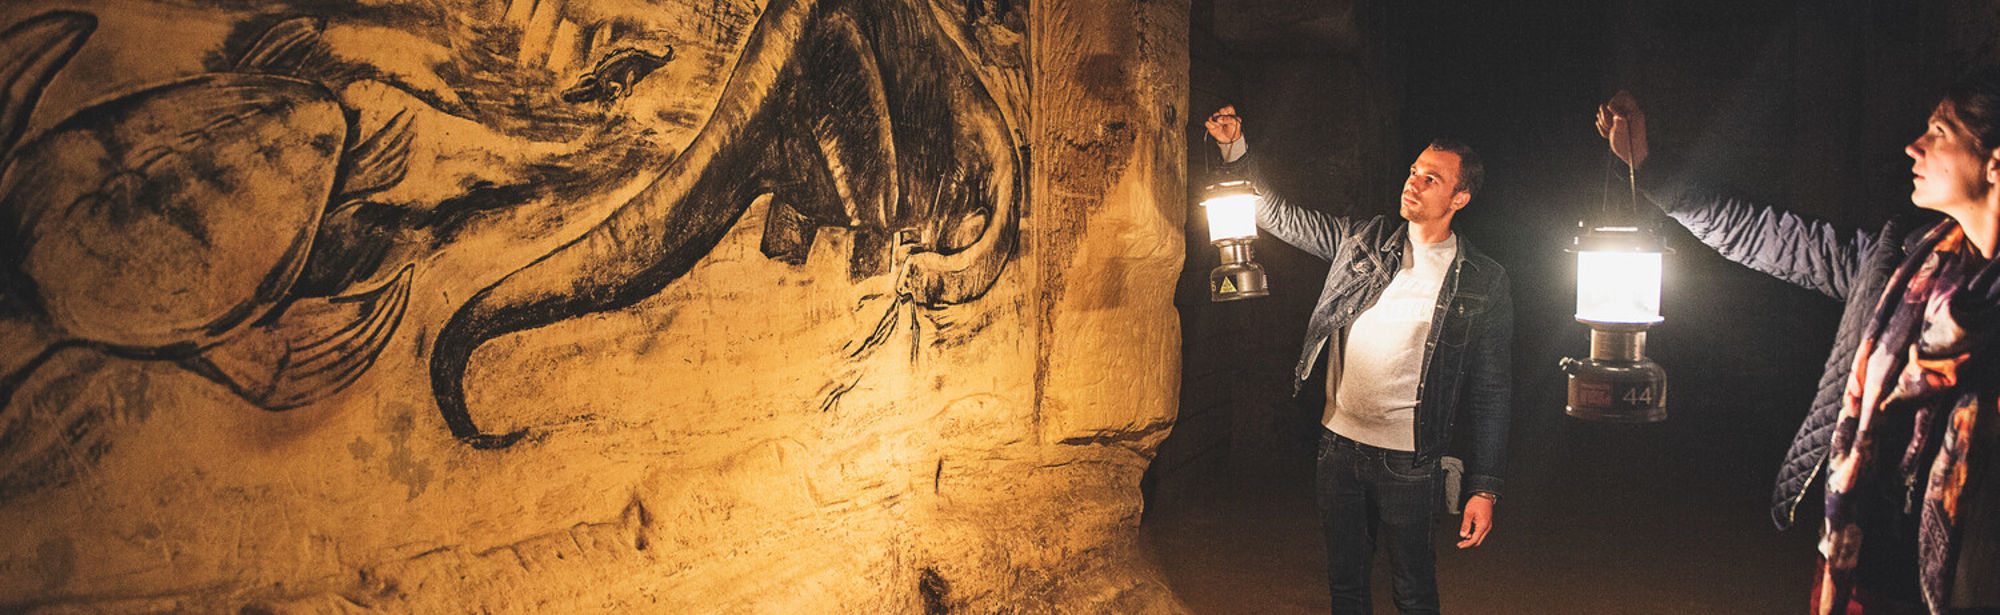 Tekening Grotten Noord Mergel Dinosaurus Underground Maastricht Marketing Jonathan Vos